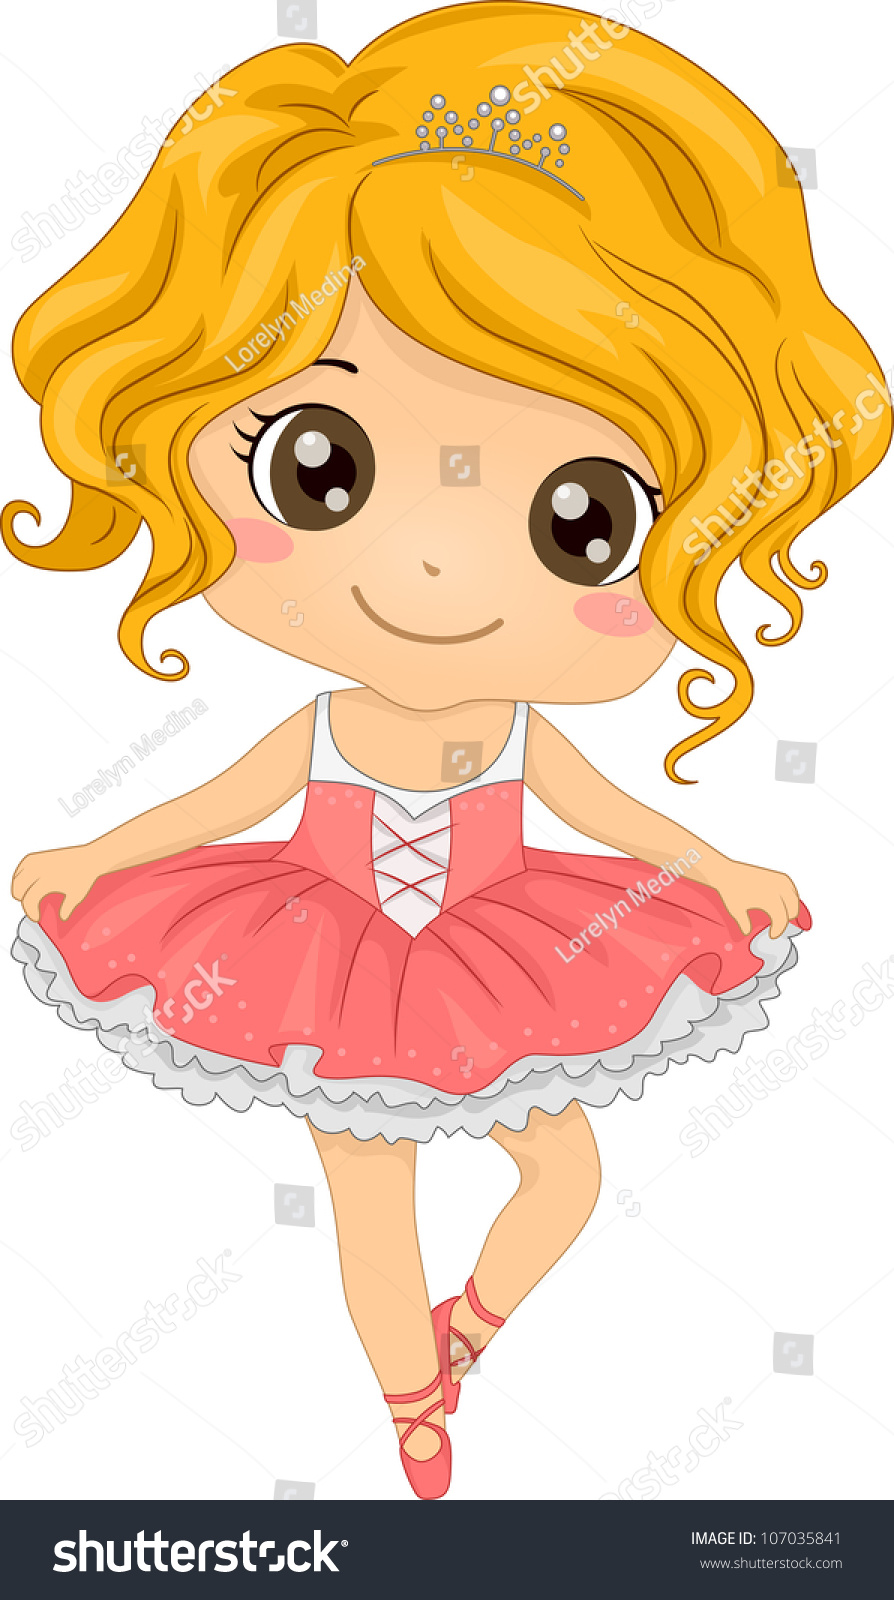 Illustration Featuring A Little Ballerina - 107035841 : Shutterstock